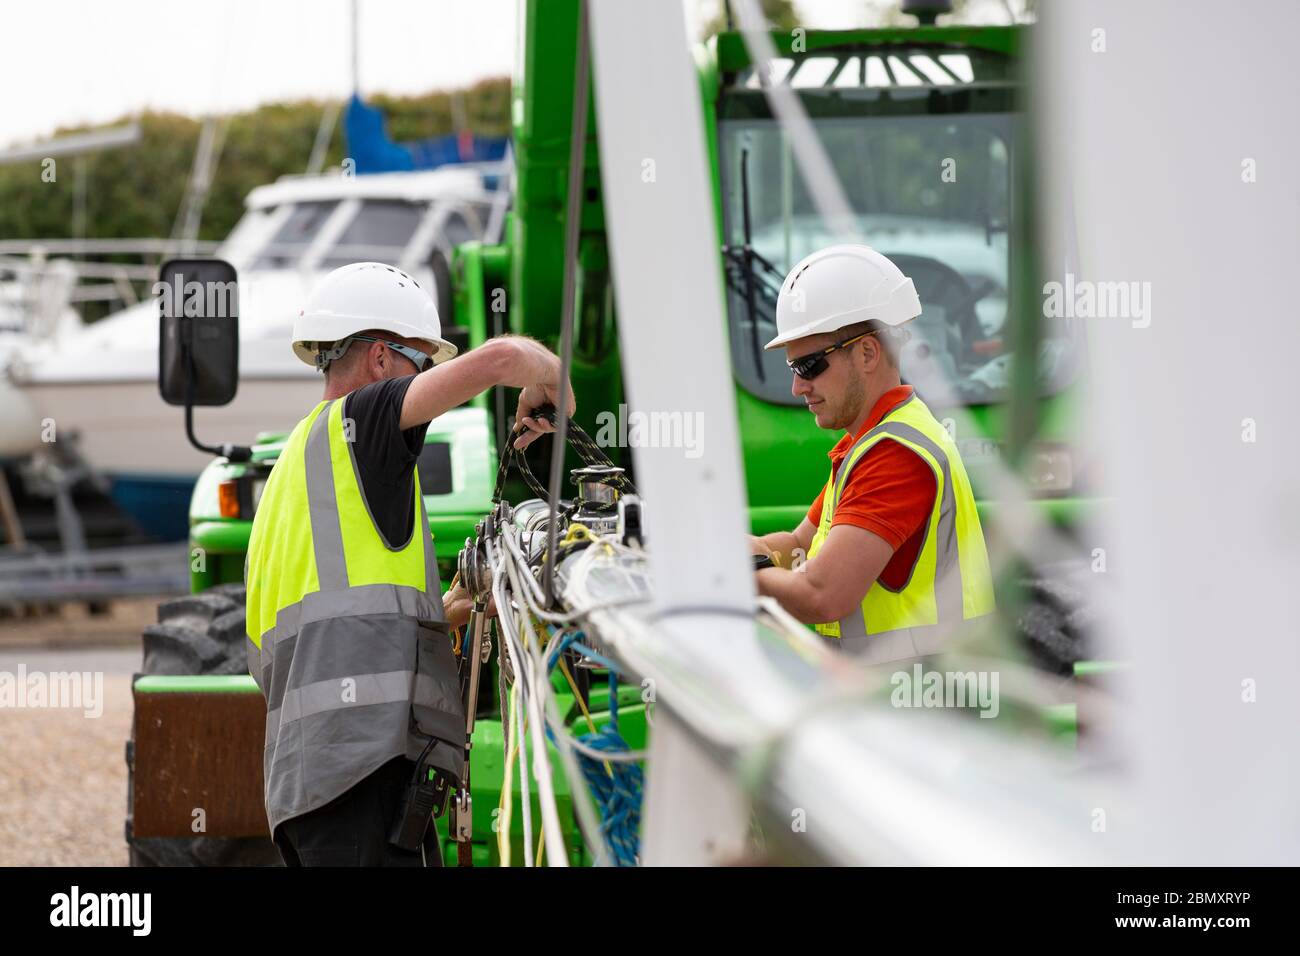 Staff working at UK boatyard Stock Photo